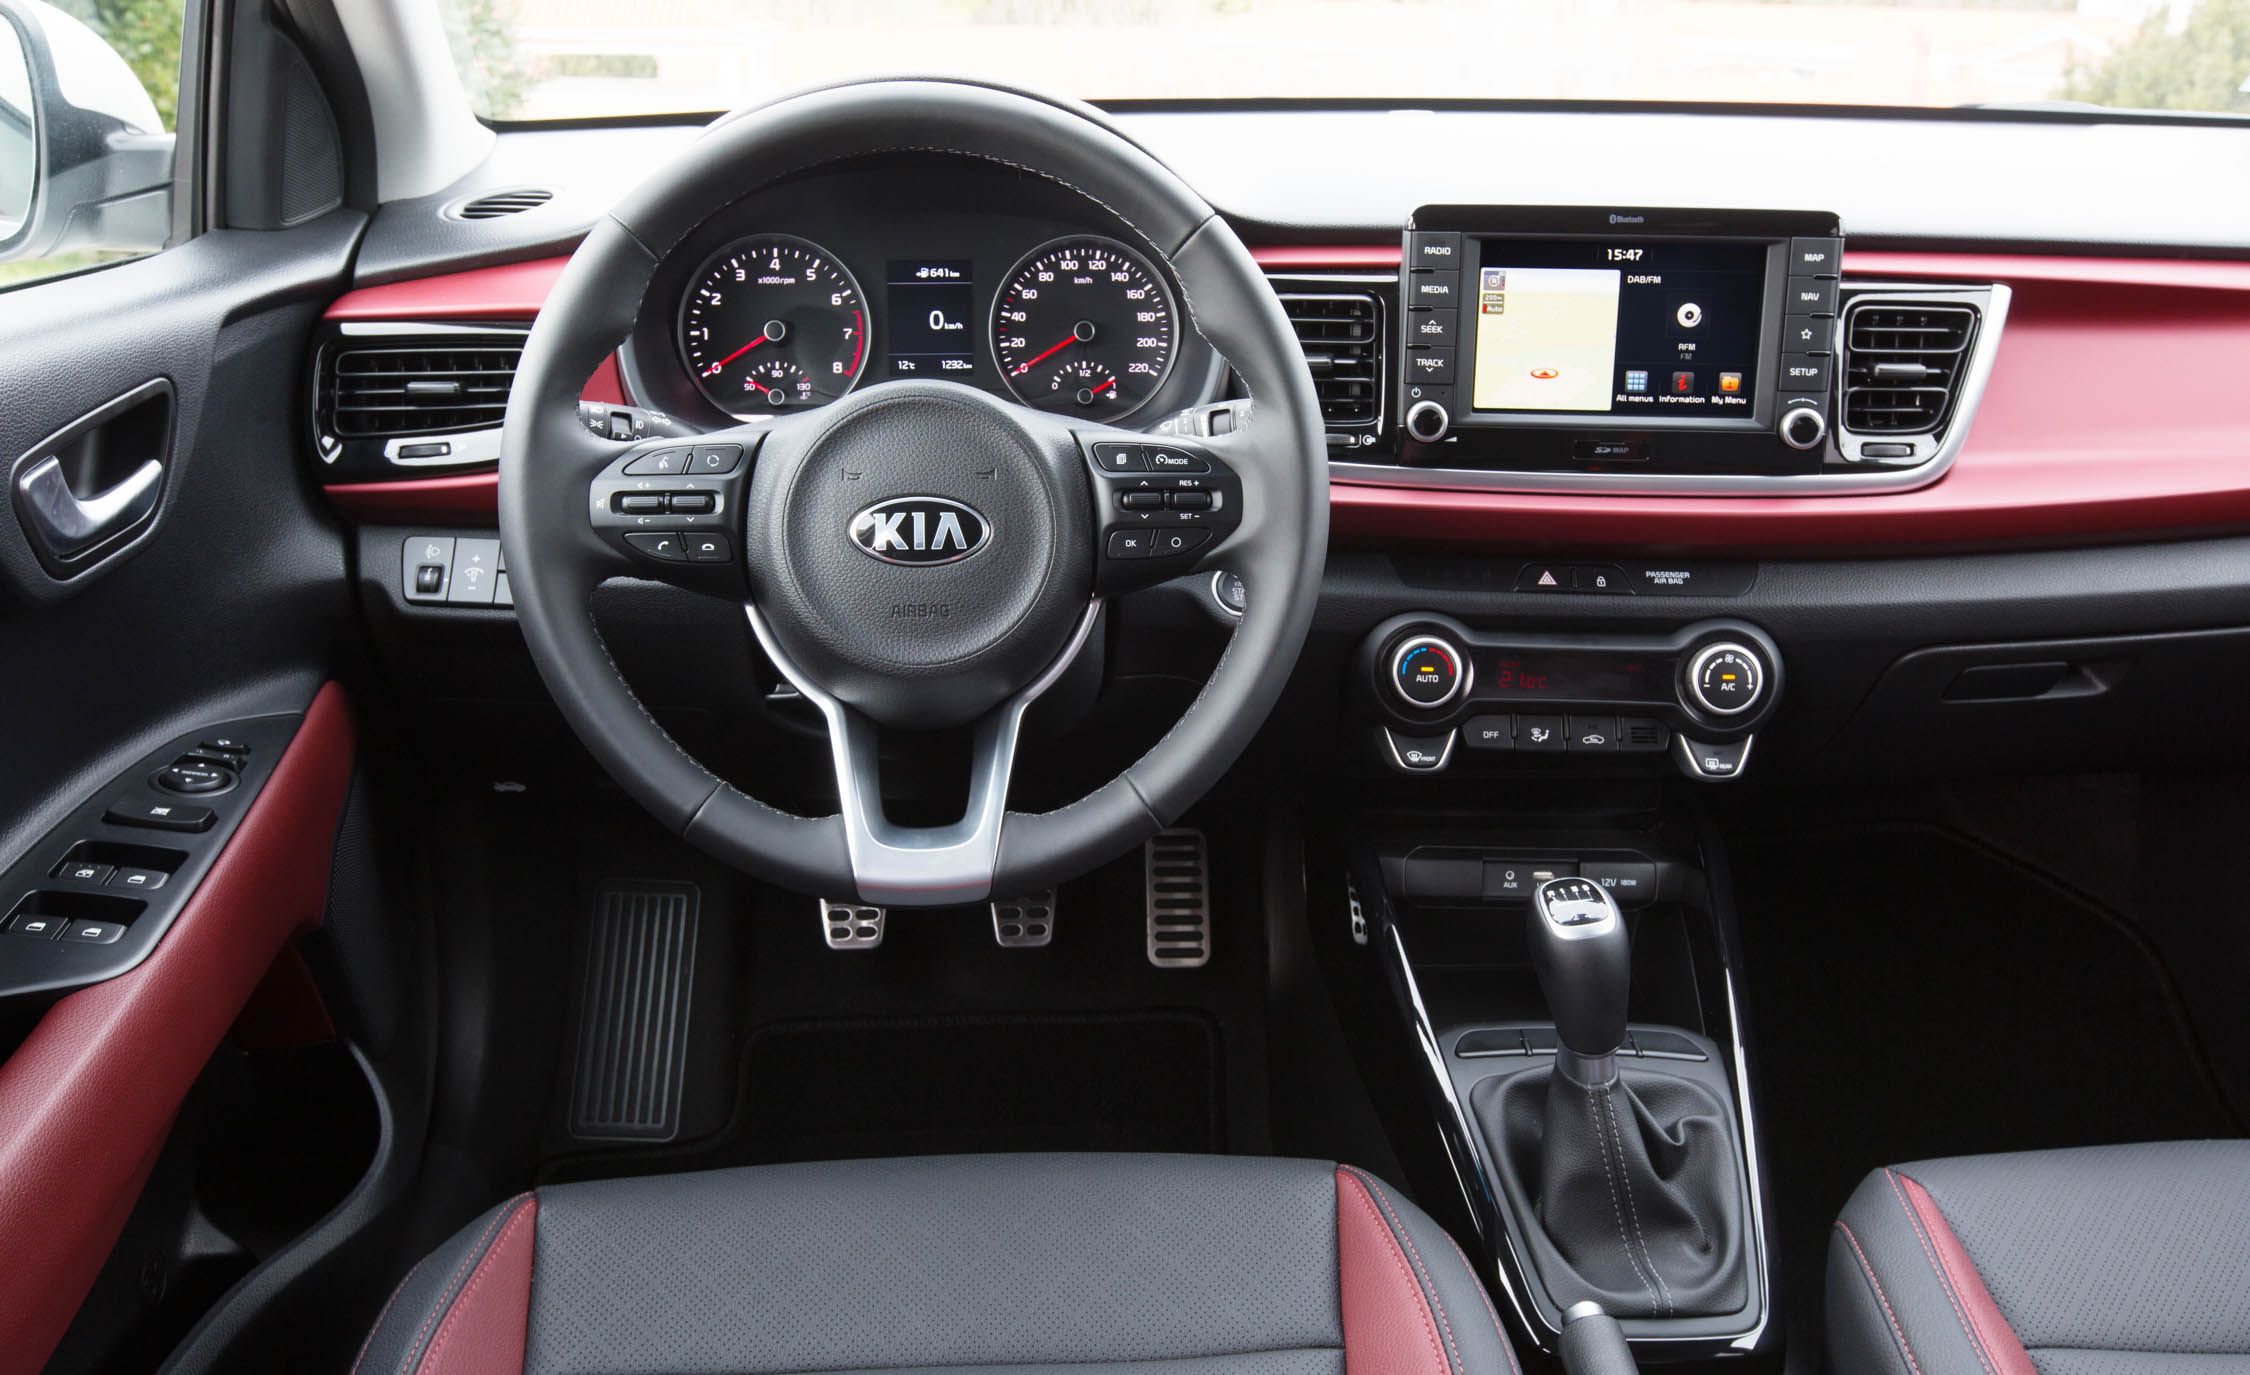 2018 Kia Rio Hatchback Interior Cockpit Steering And Dash (View 23 of 49)